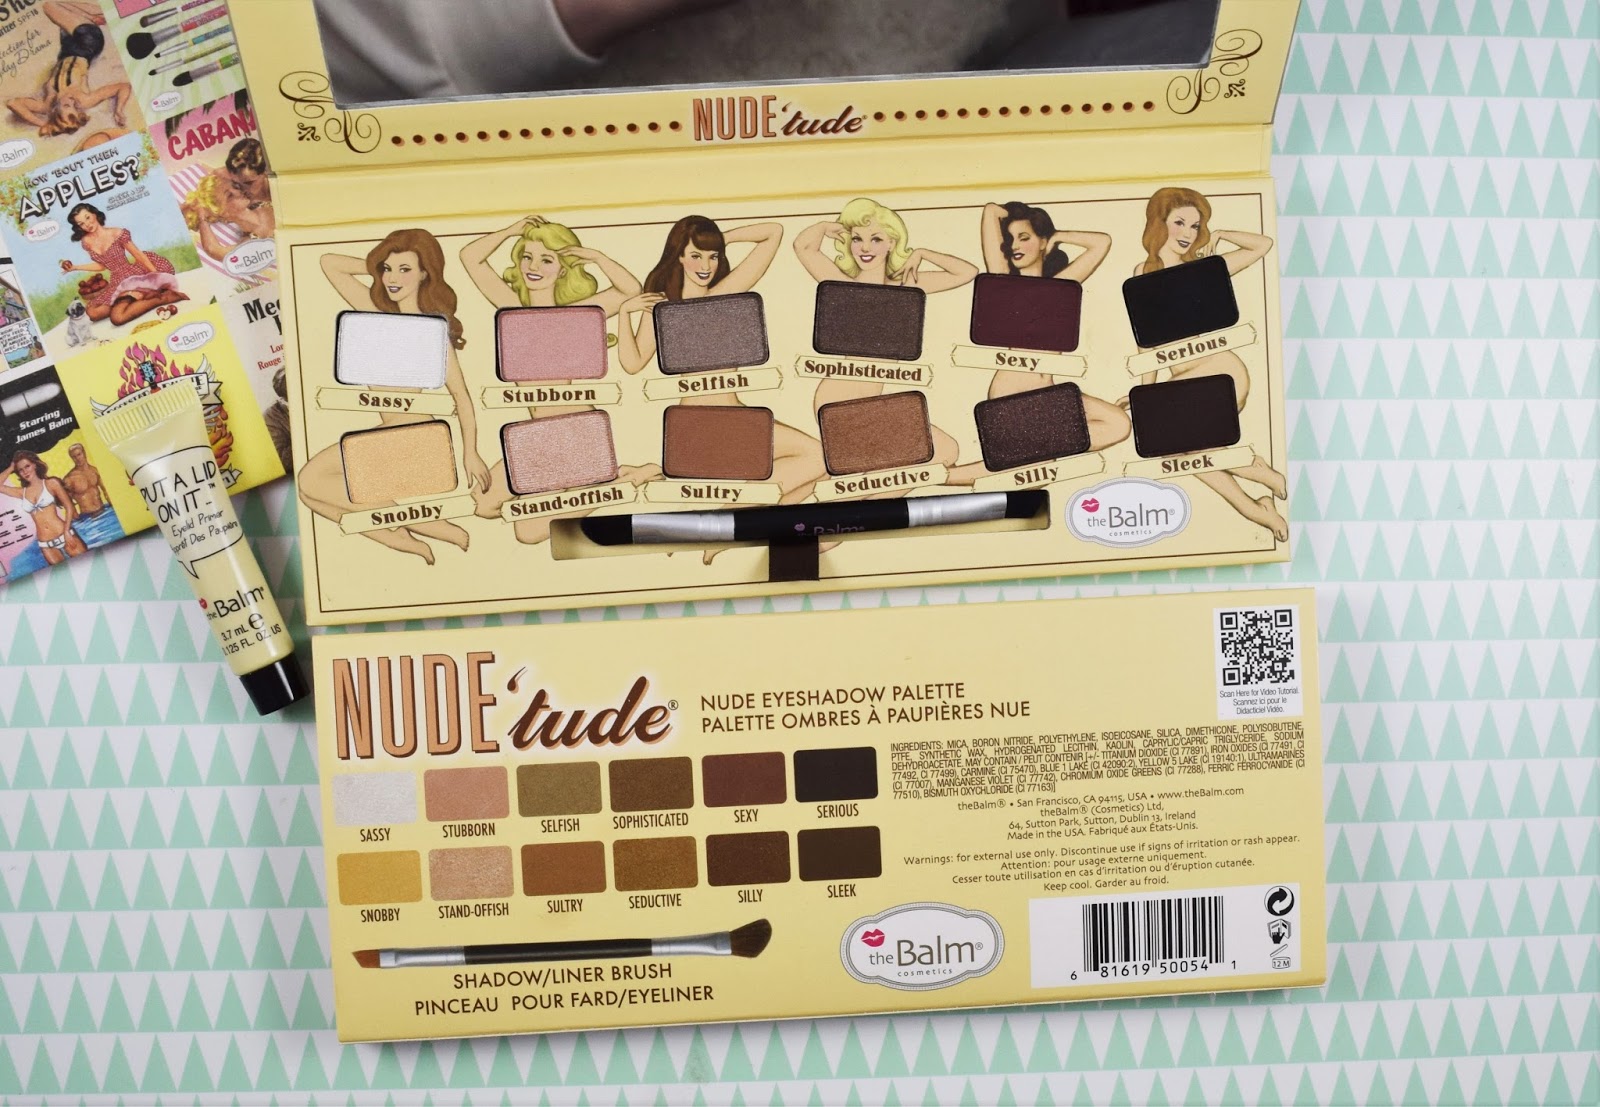 The balm nude’tude eyeshadow palette.